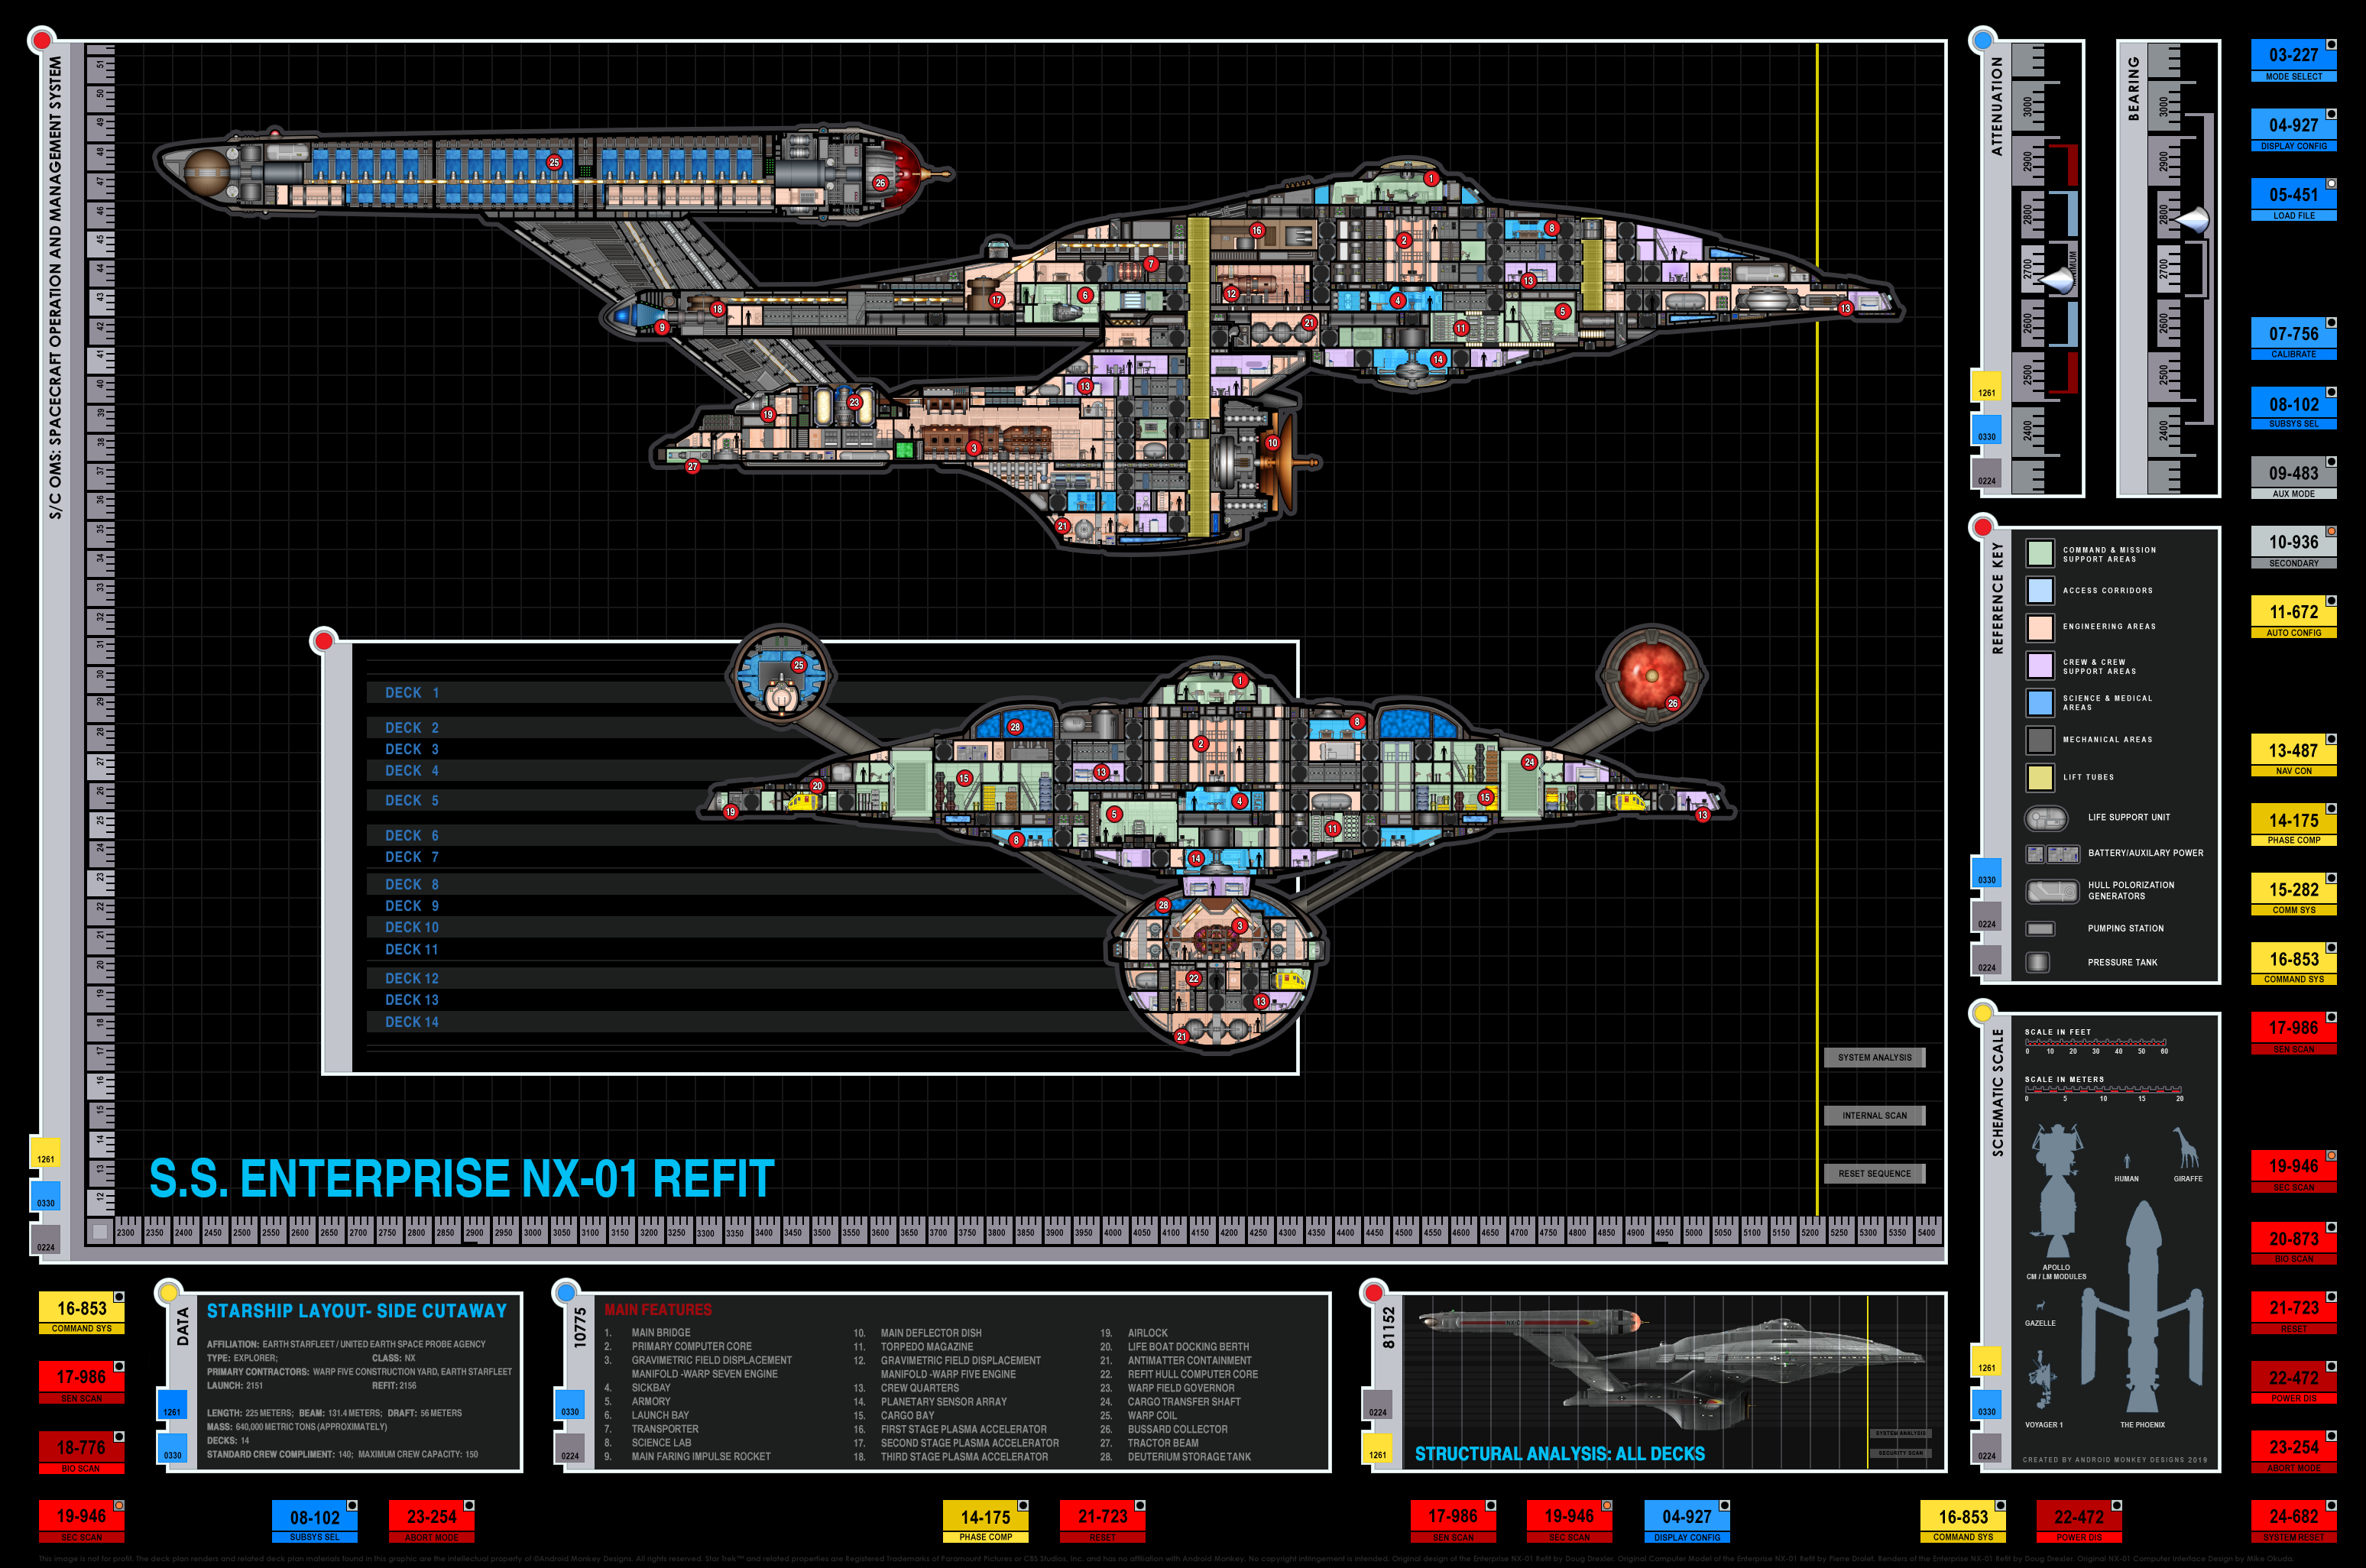 Enterprise NX-01 refit deck 3. enterprise NX-01 refit deck 4. e...